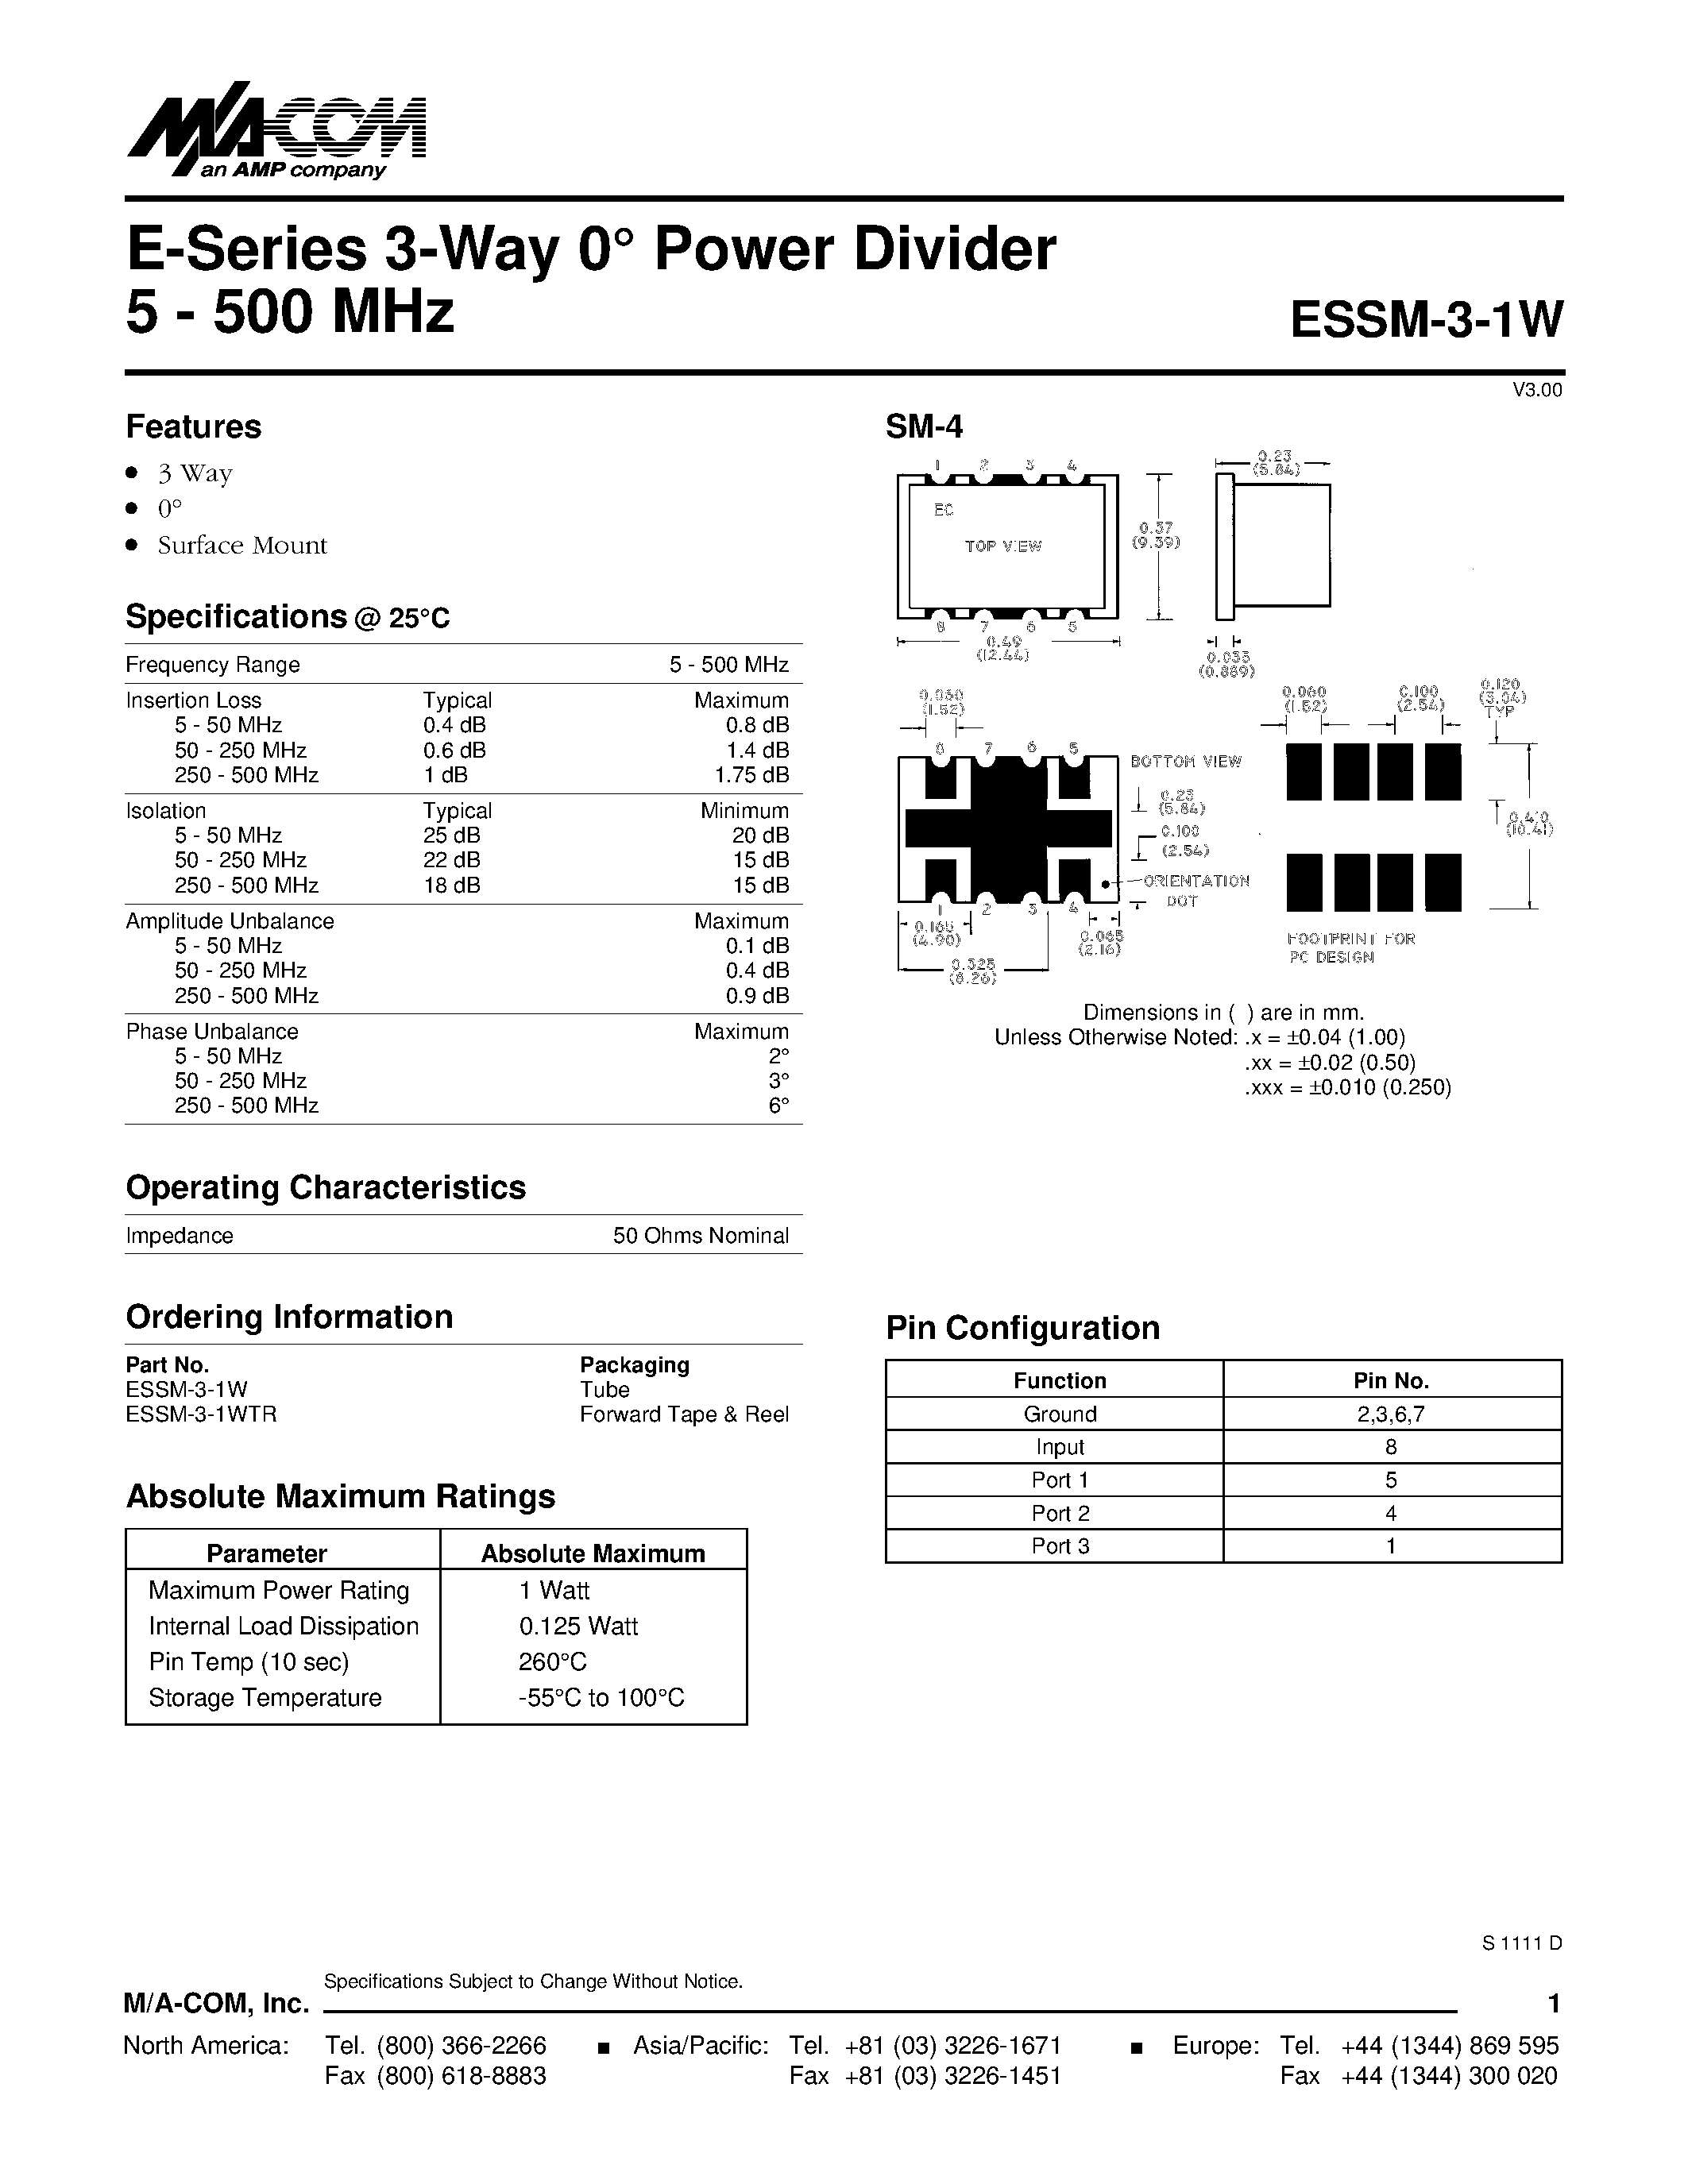 Даташит ESSM-3-1W - E-Series 3-Way 0 Power Divider 5 - 500 MHz страница 1